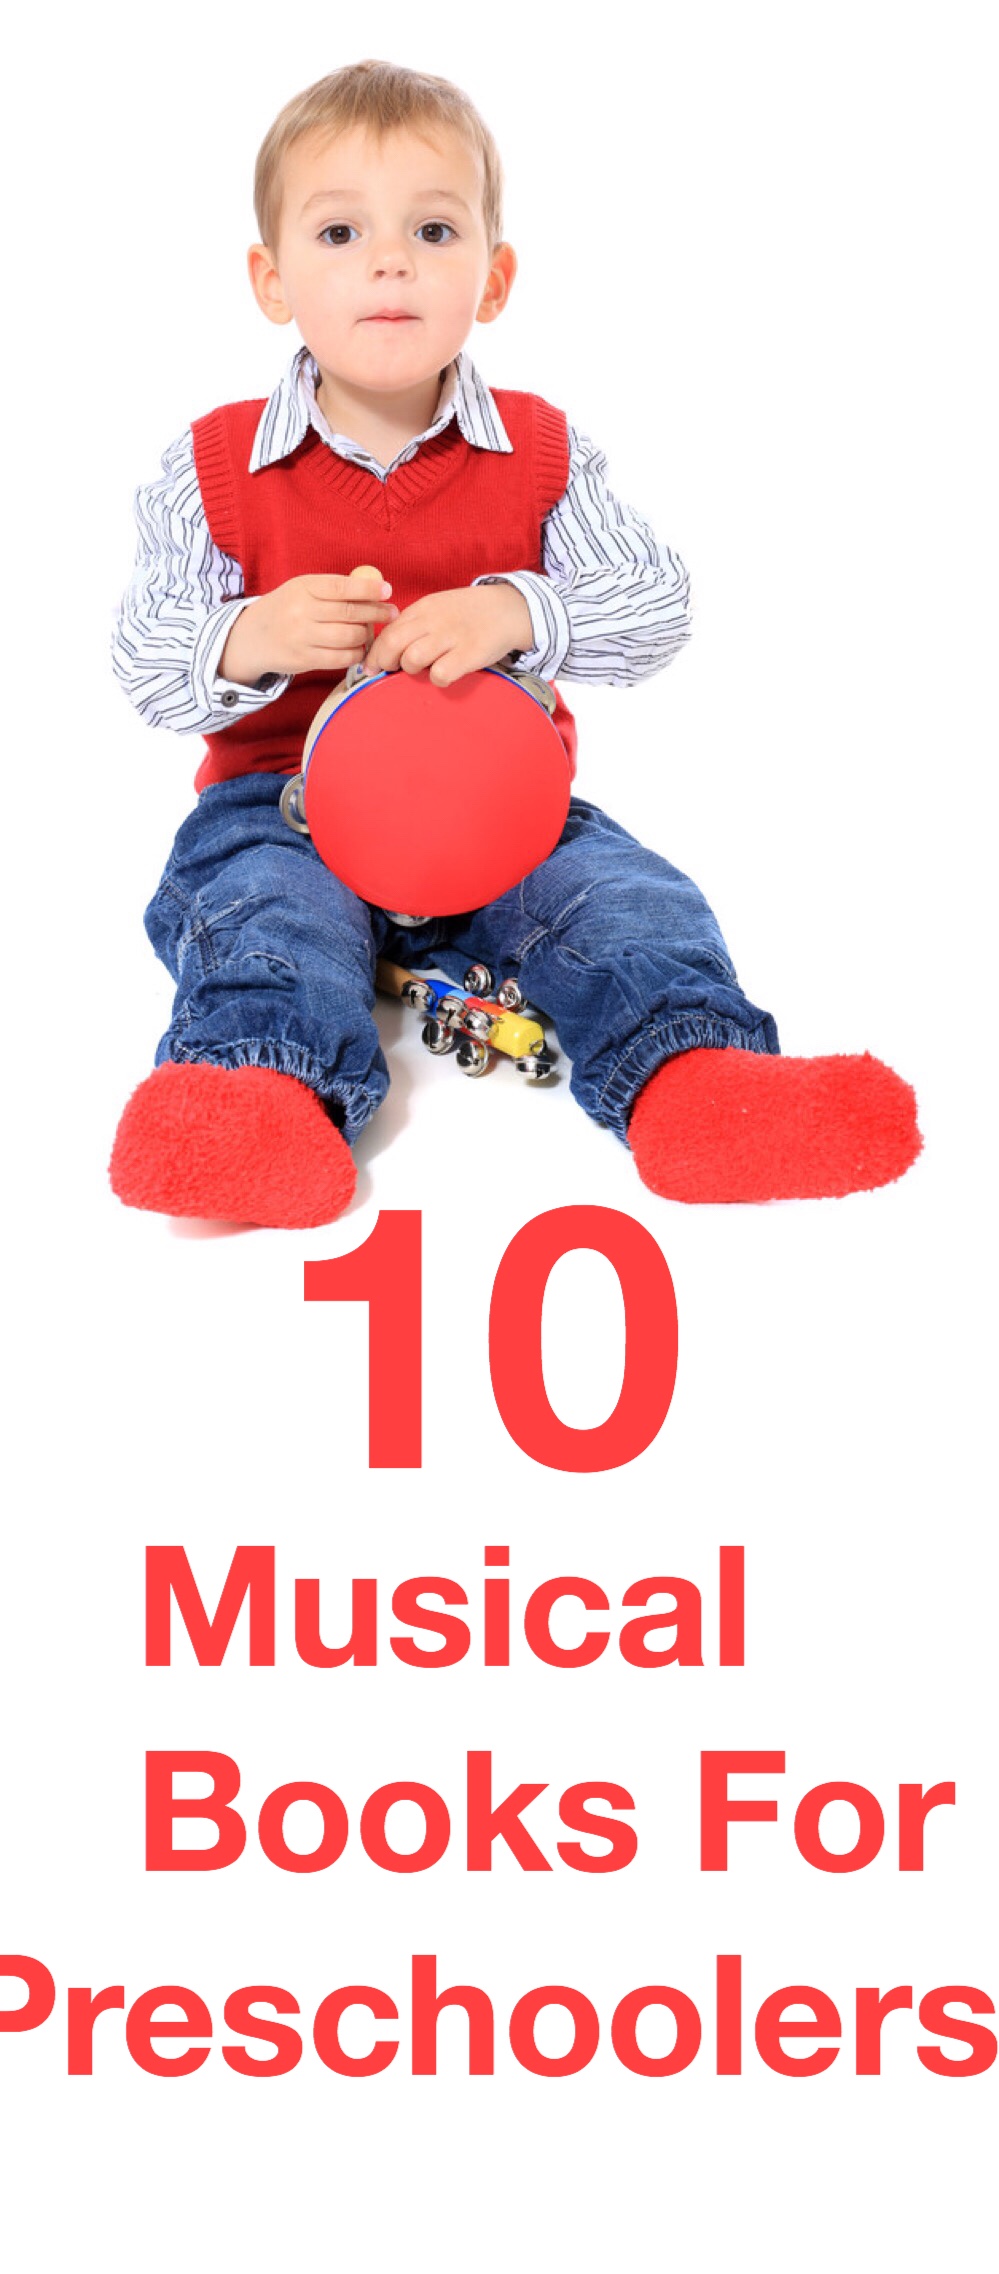 10 Musical Books for Preschoolers pin